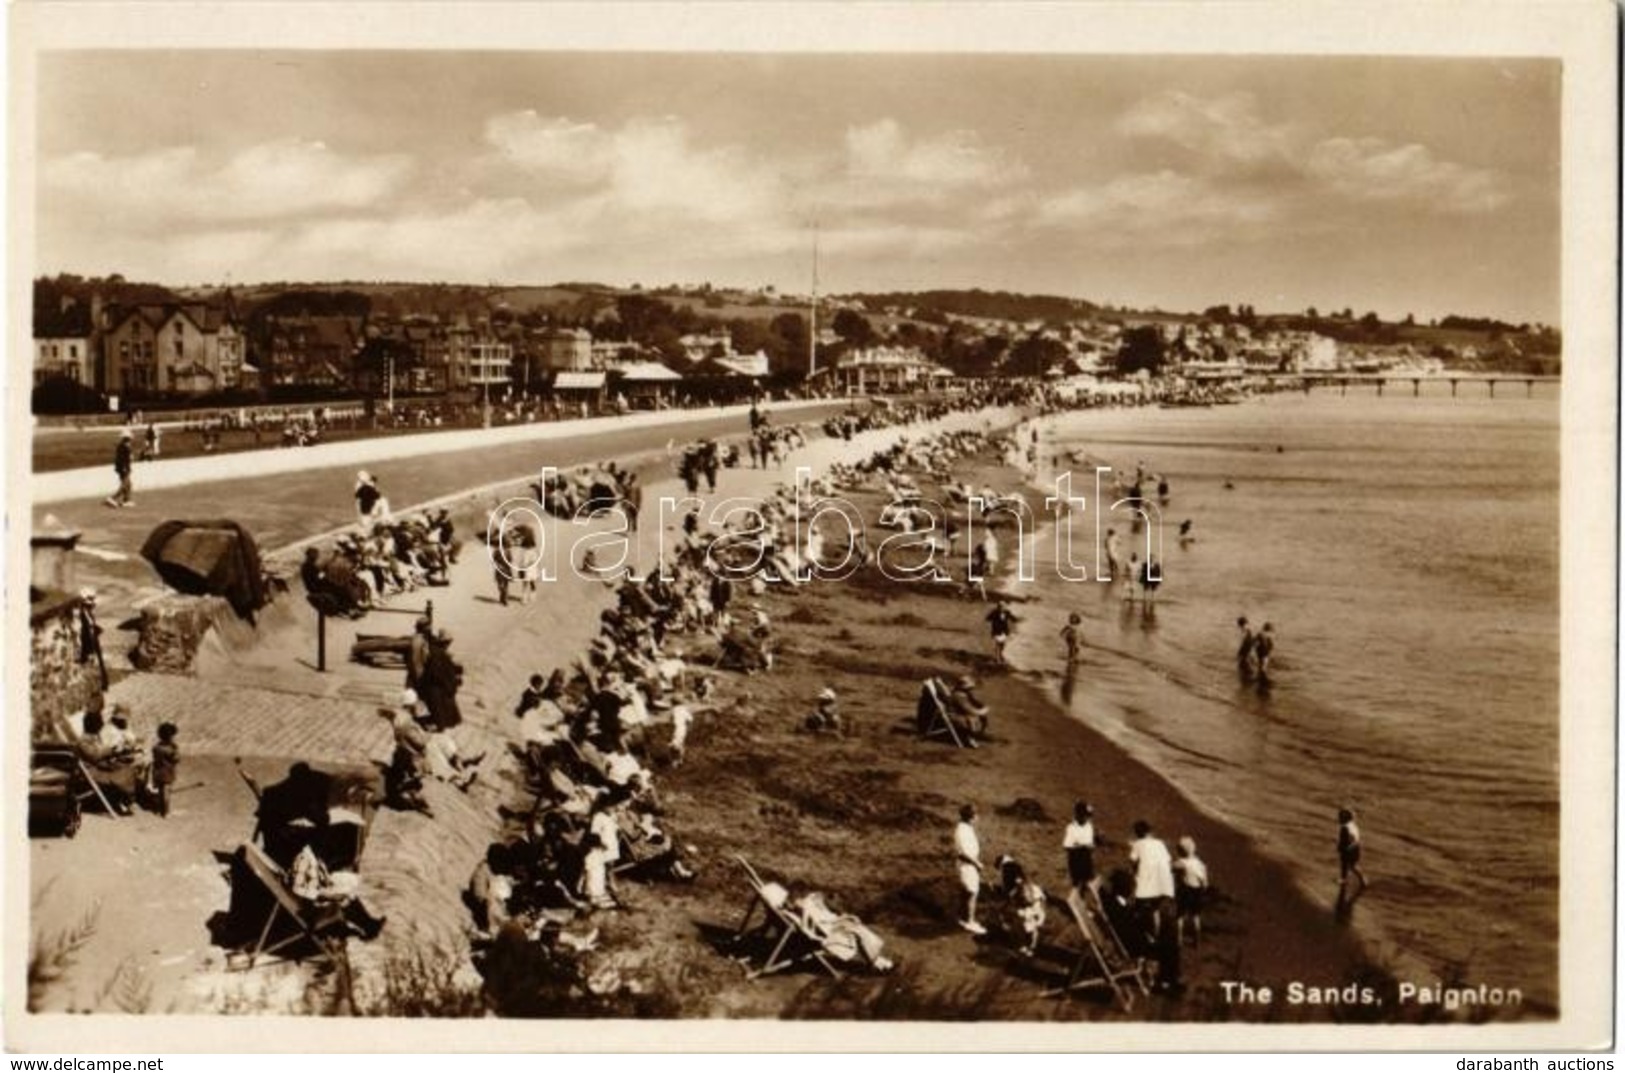 ** 20 Db Régi Angol Tengerparti Városképes Lap / 20 Pre-1945 British Seaside Town-view Postcards - Ohne Zuordnung